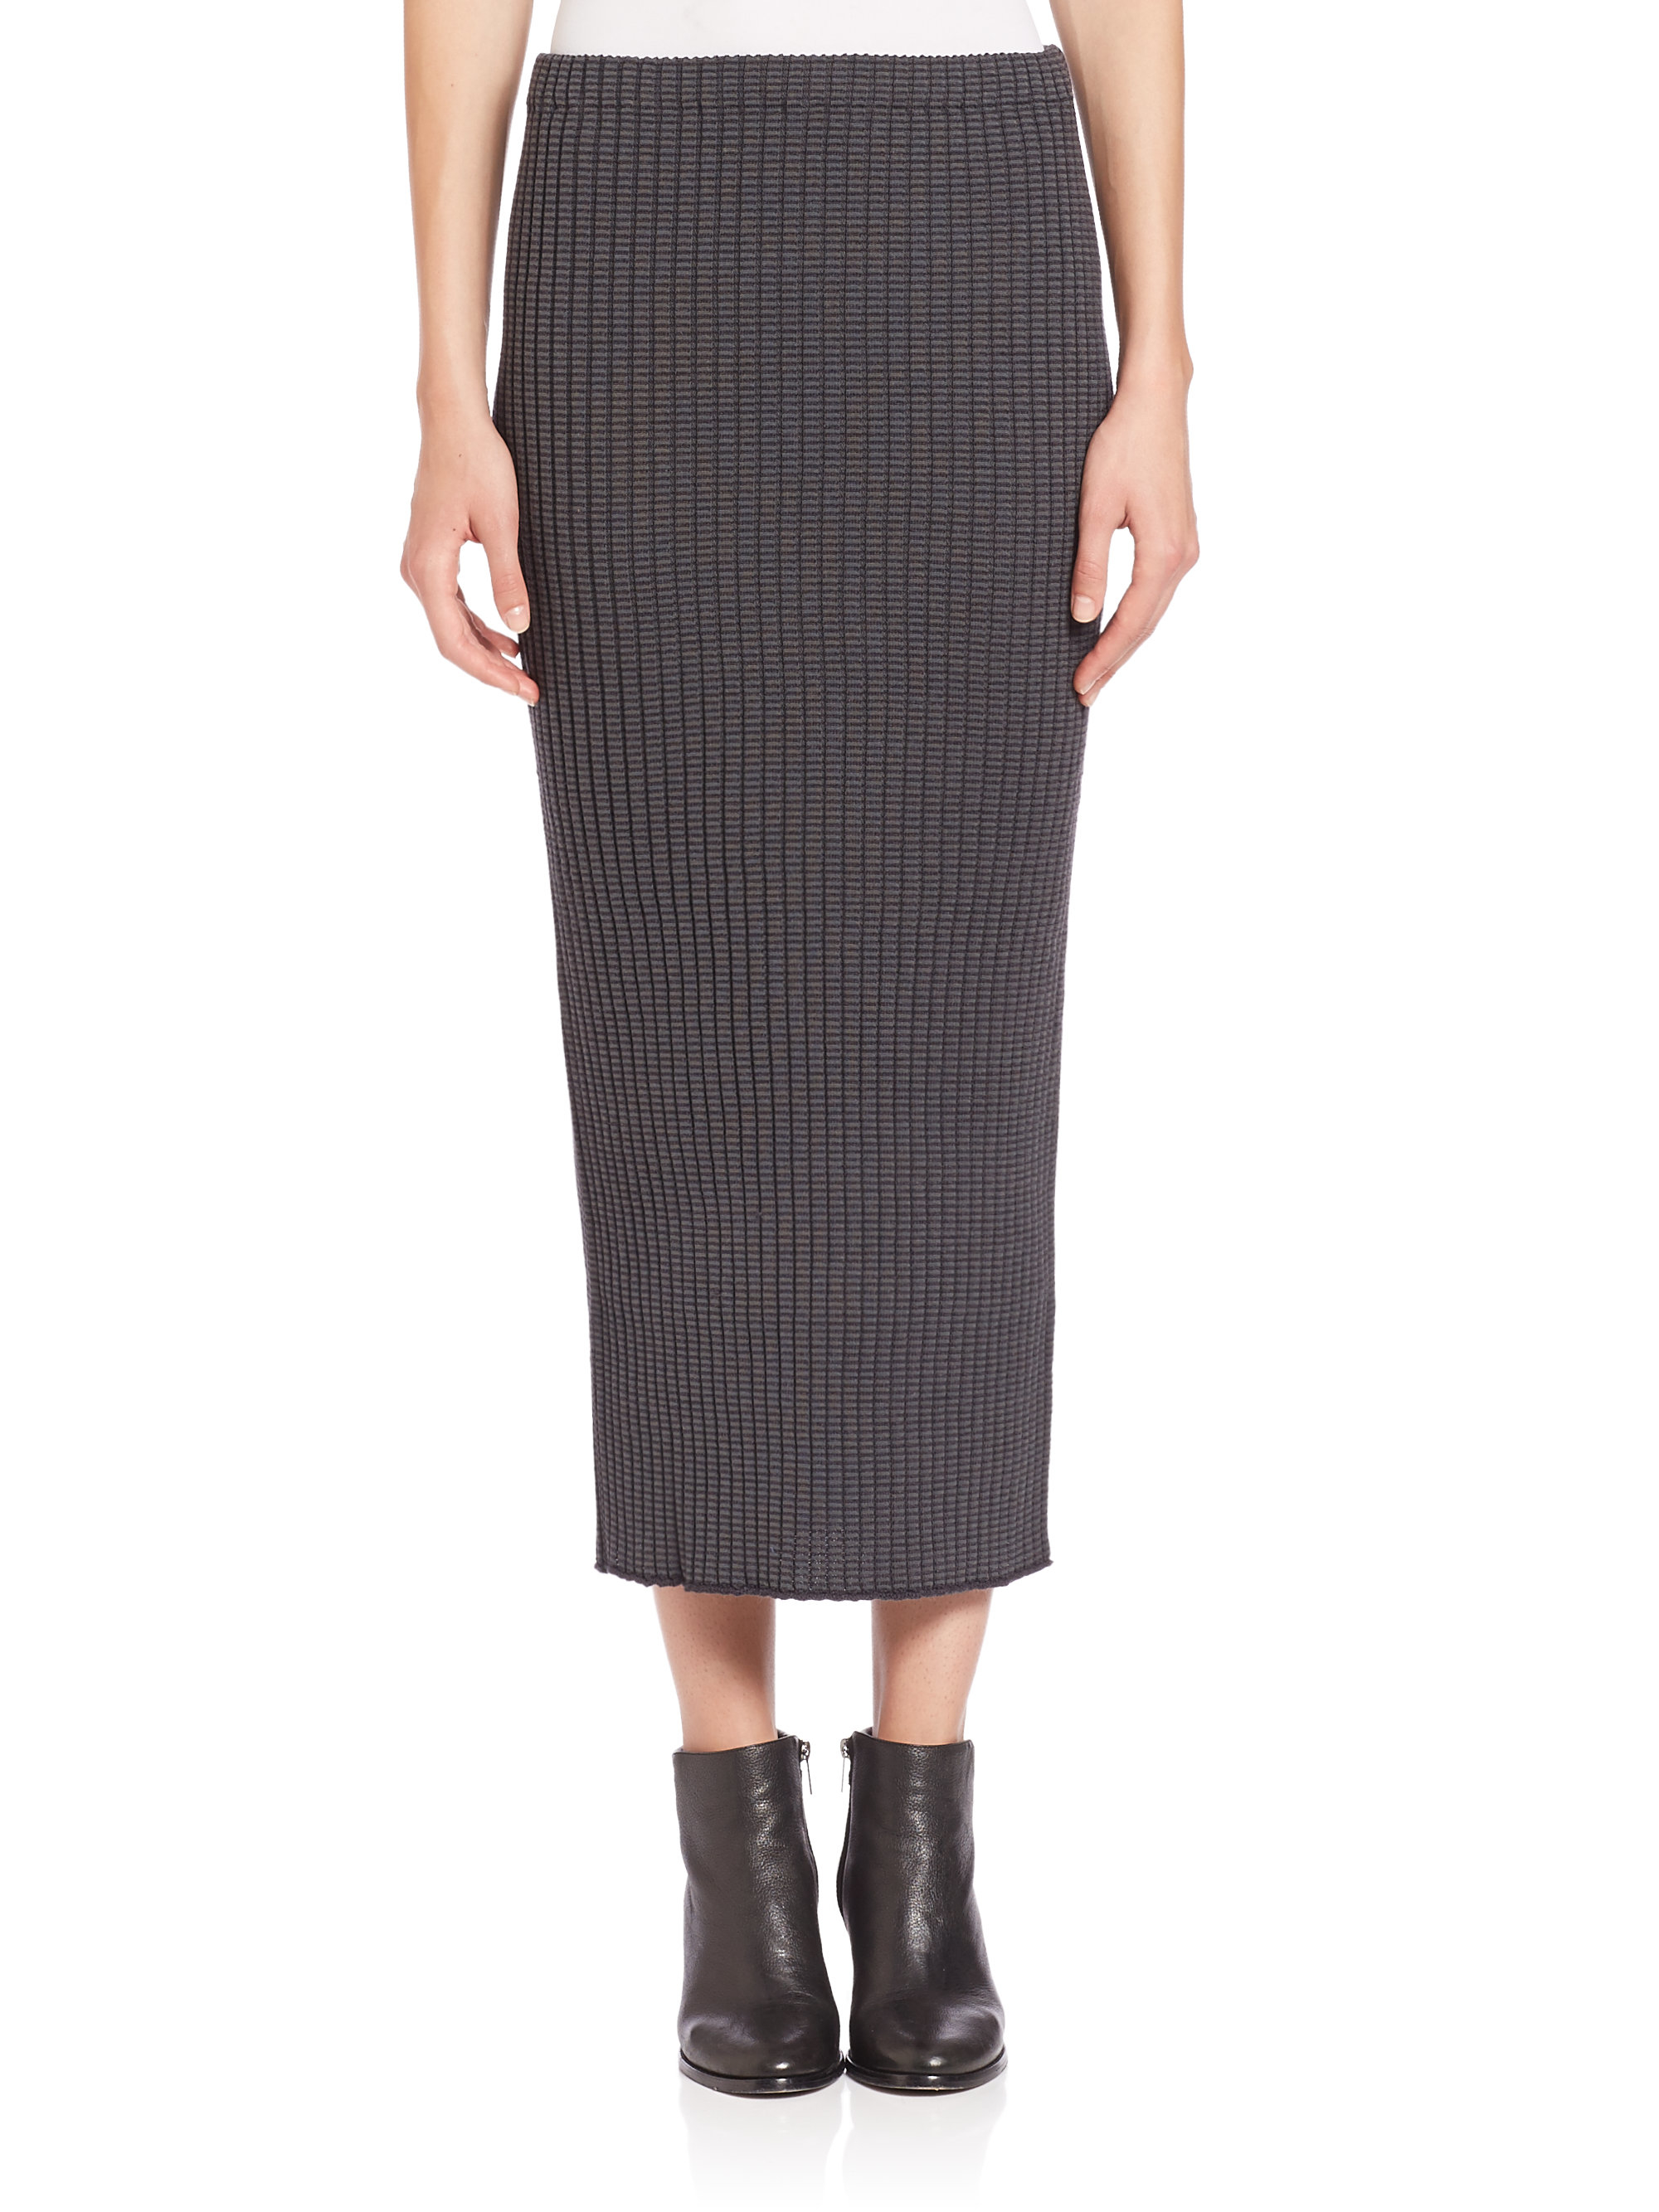 Lyst - Wes gordon Rib-knit Pencil Skirt in Gray